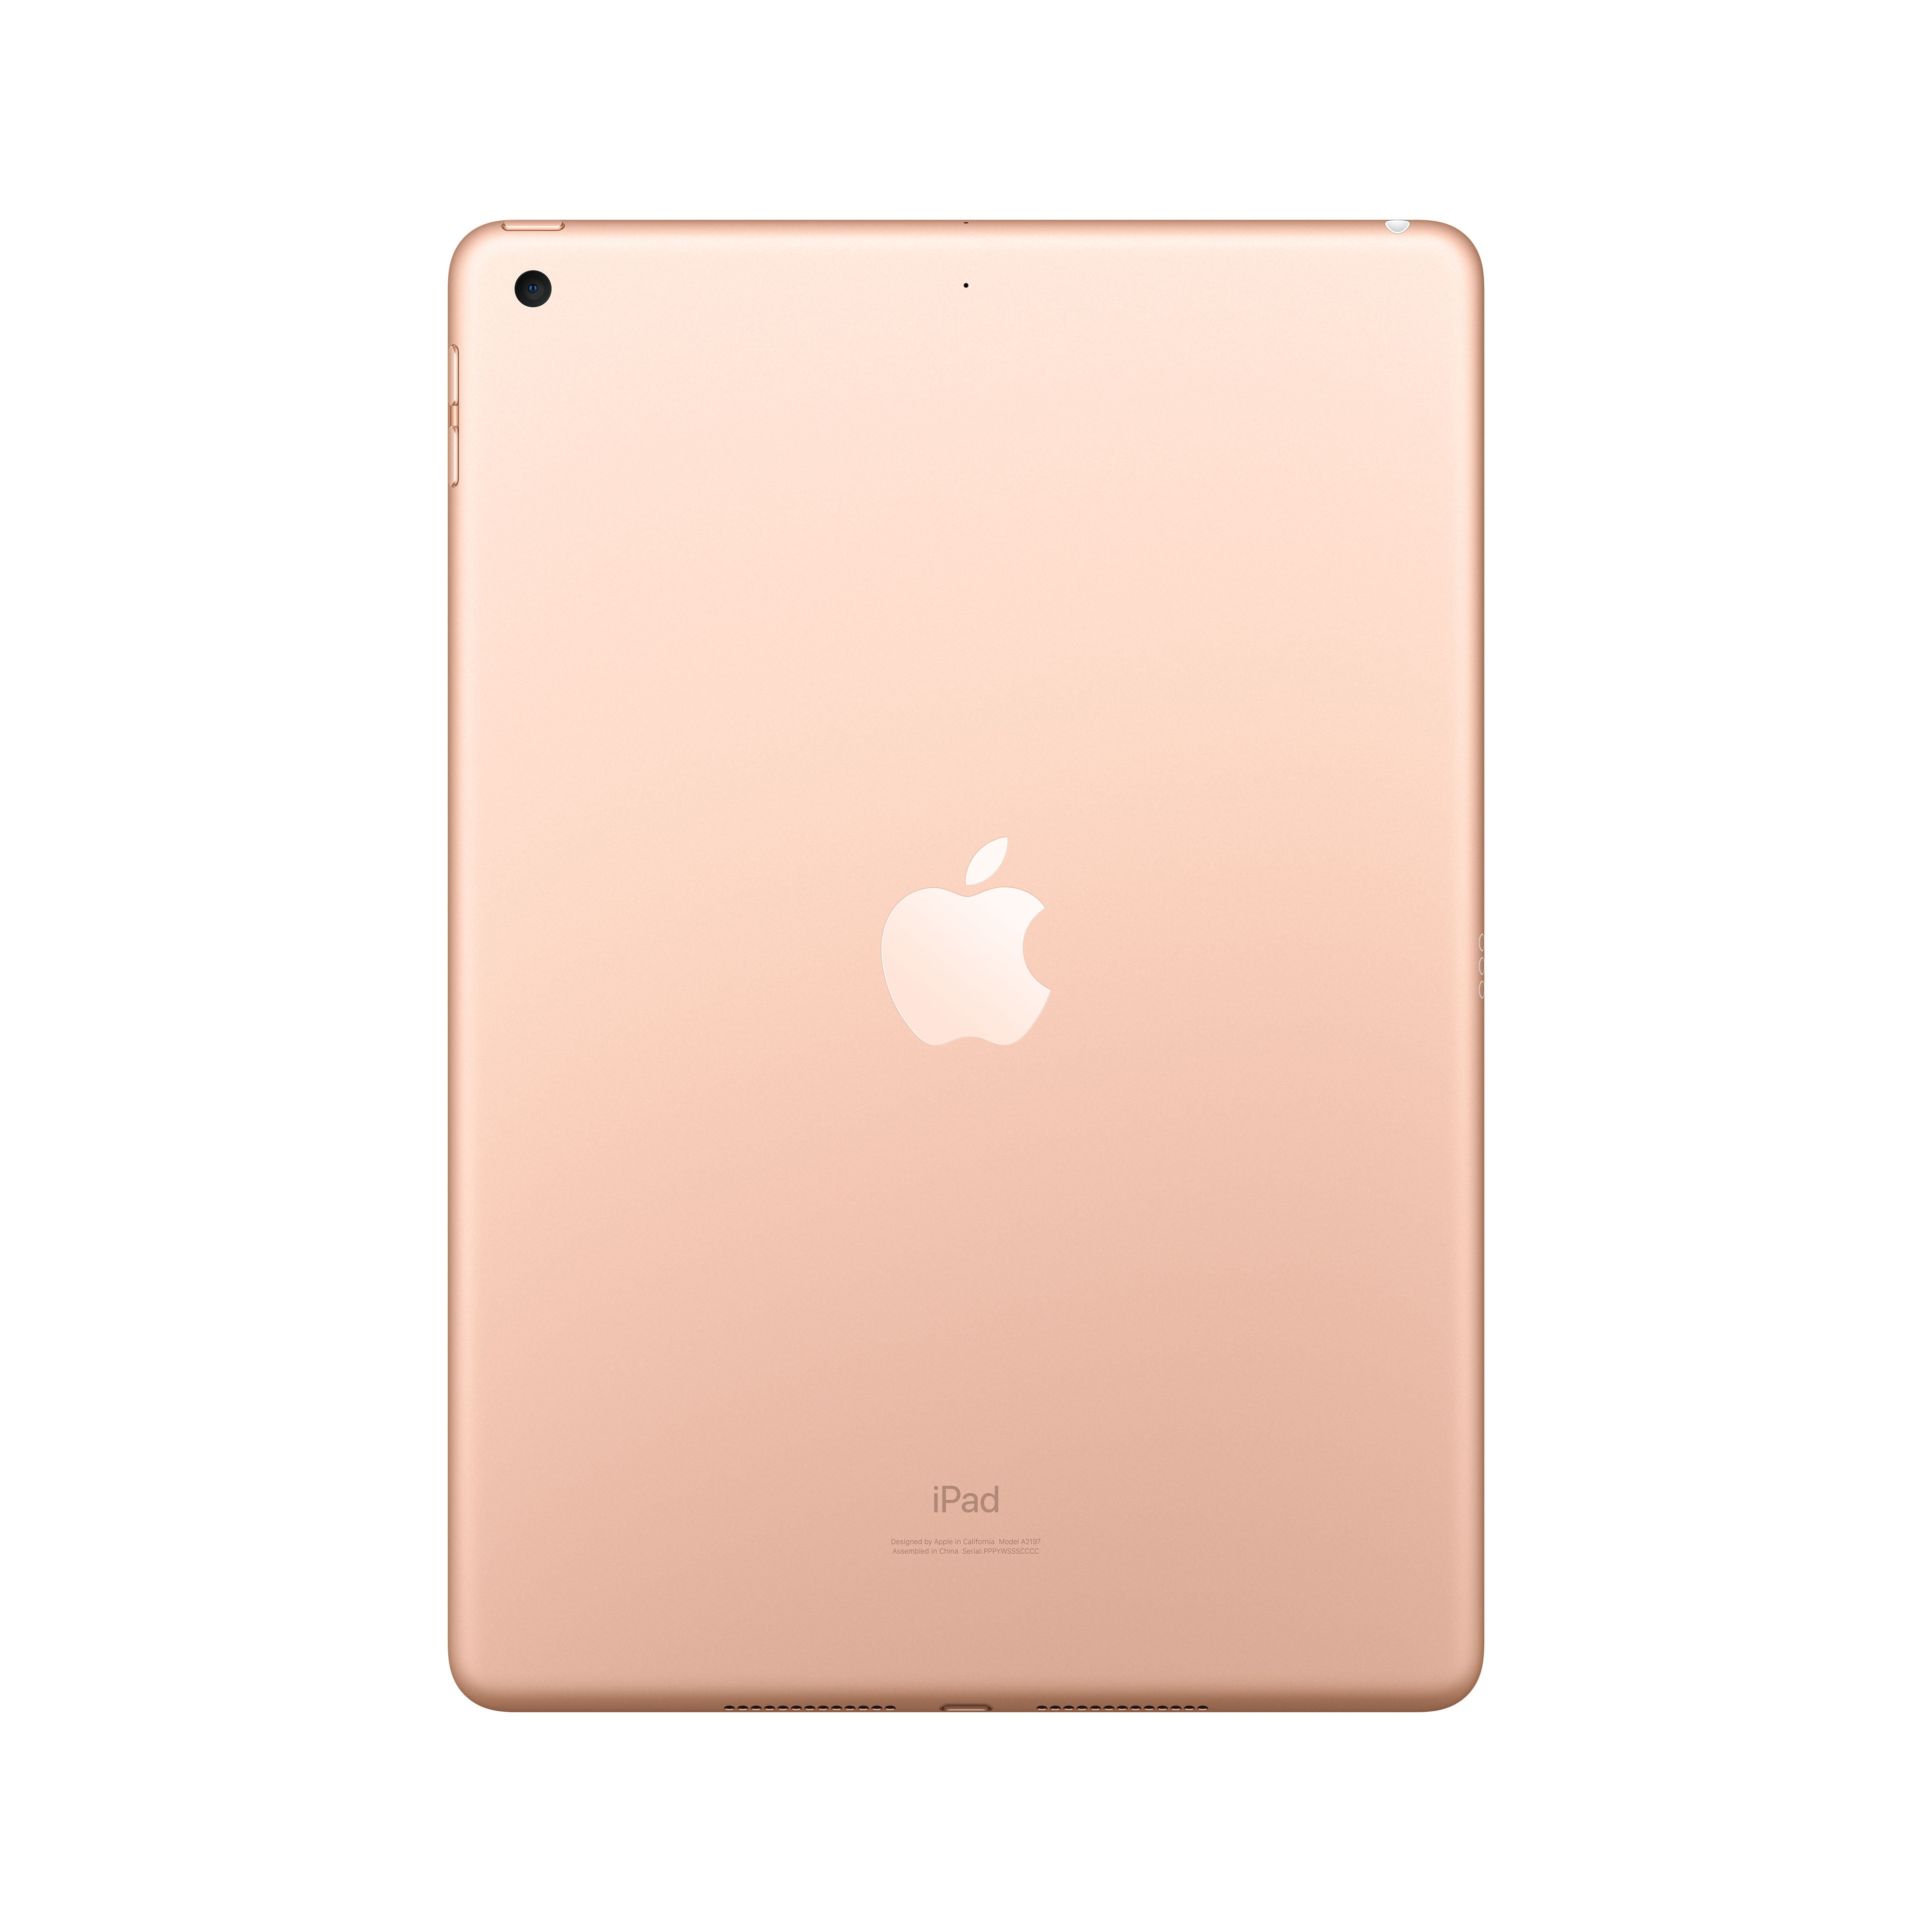 Apple 10.2-inch iPad (7th Gen)Wi-Fi 128GB - Silver - Walmart.com